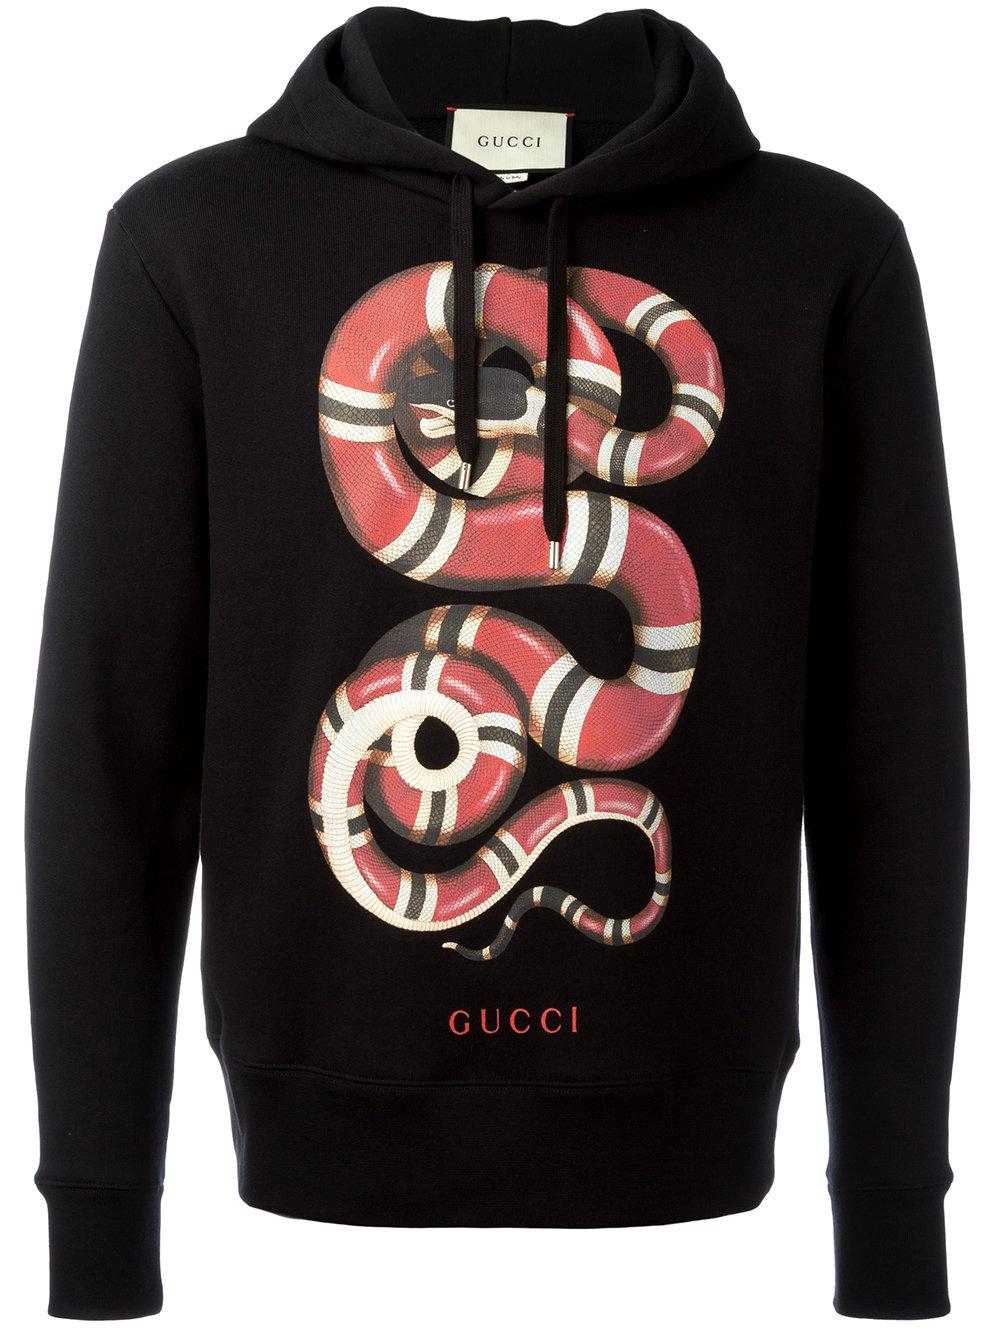 Gucci Cotton Kingsnake Print Hoodie in Black for Men - Lyst